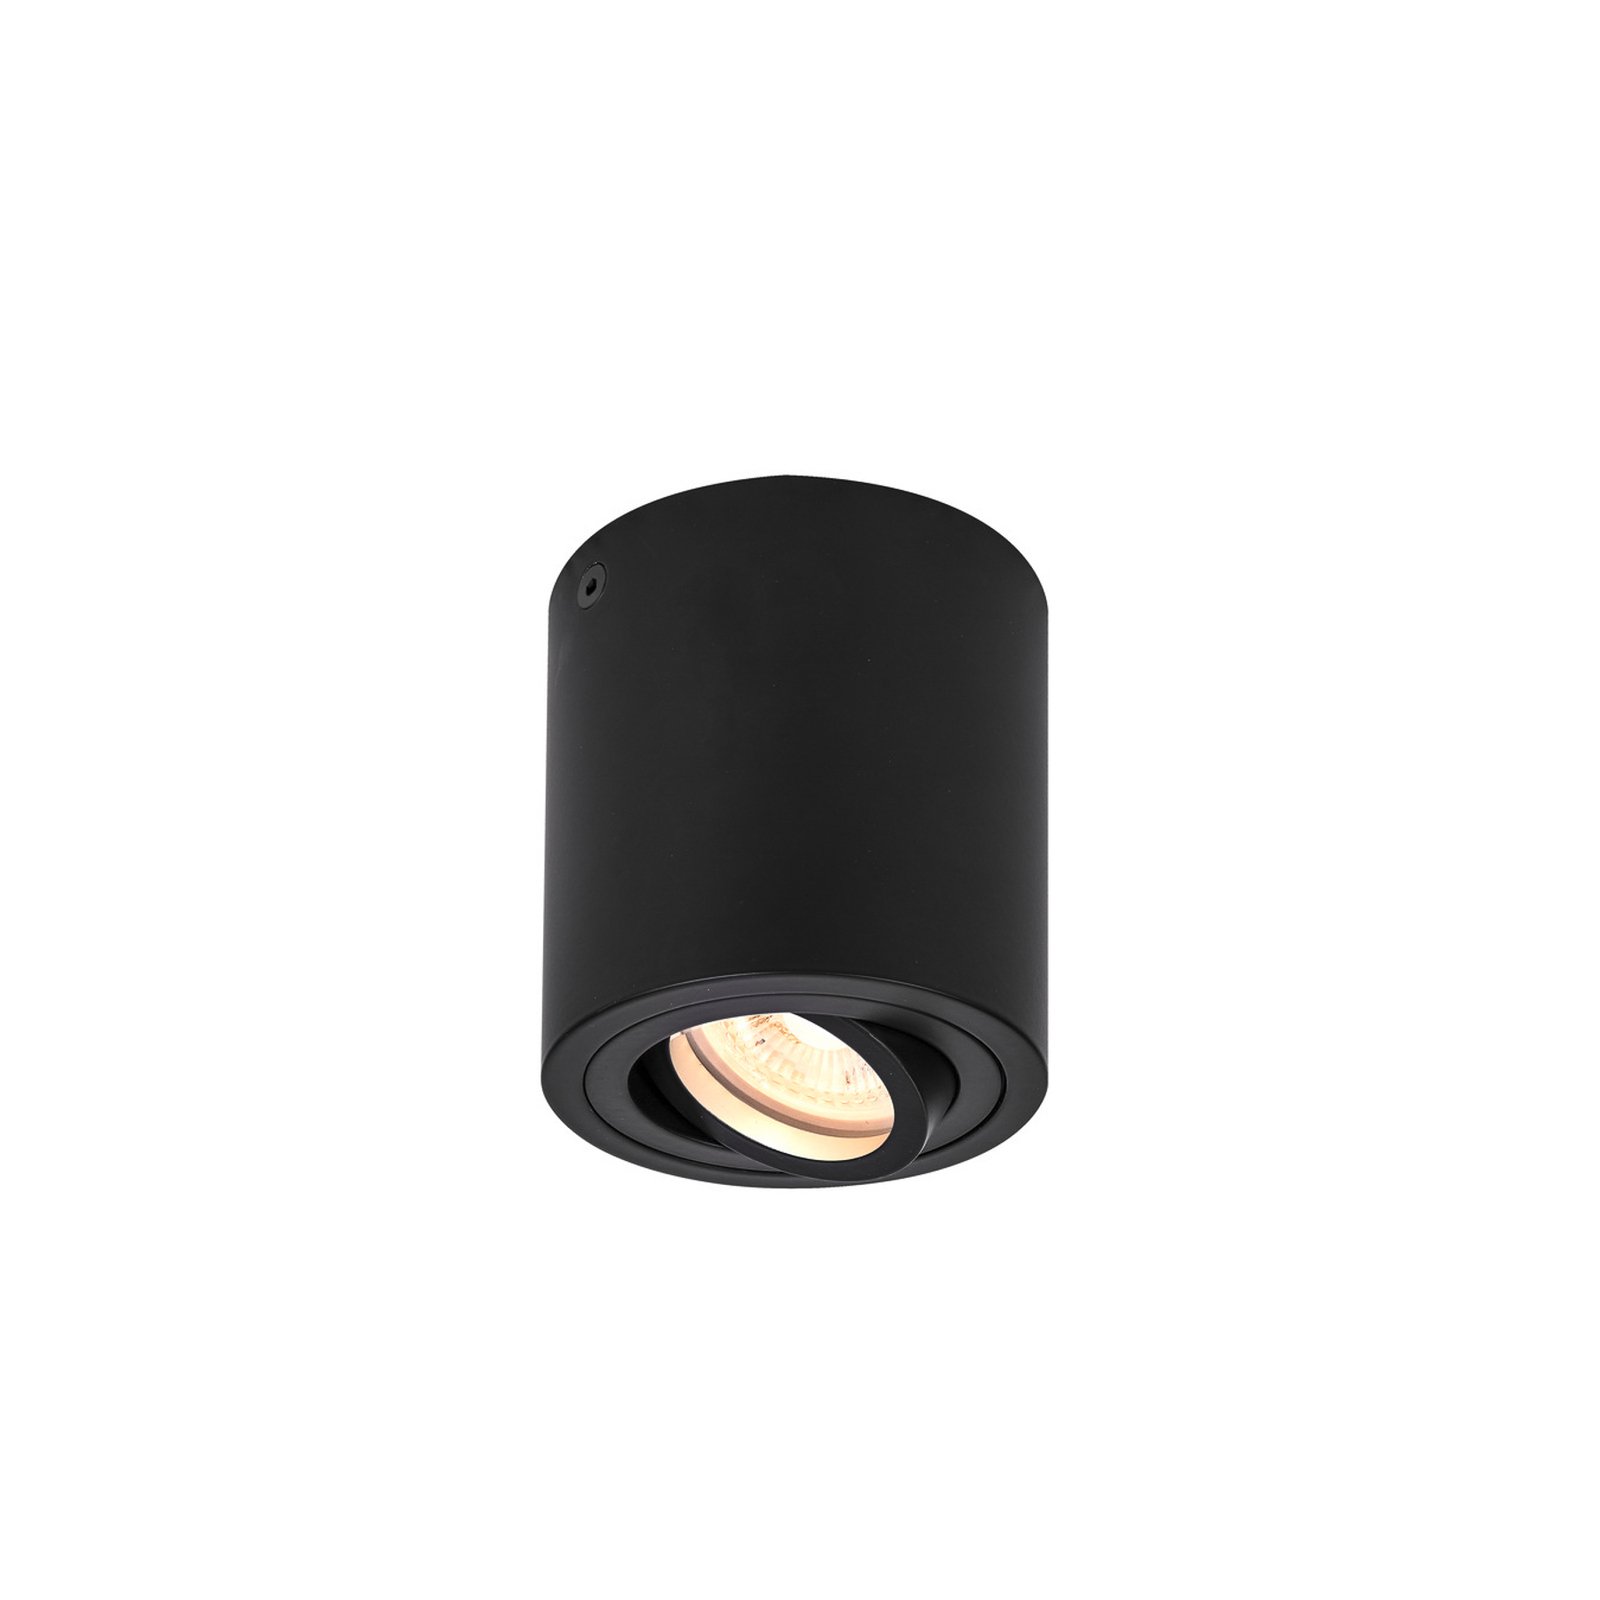 SLV Deckenlampe Triledo, schwarz, Aluminium, Ø 10 cm